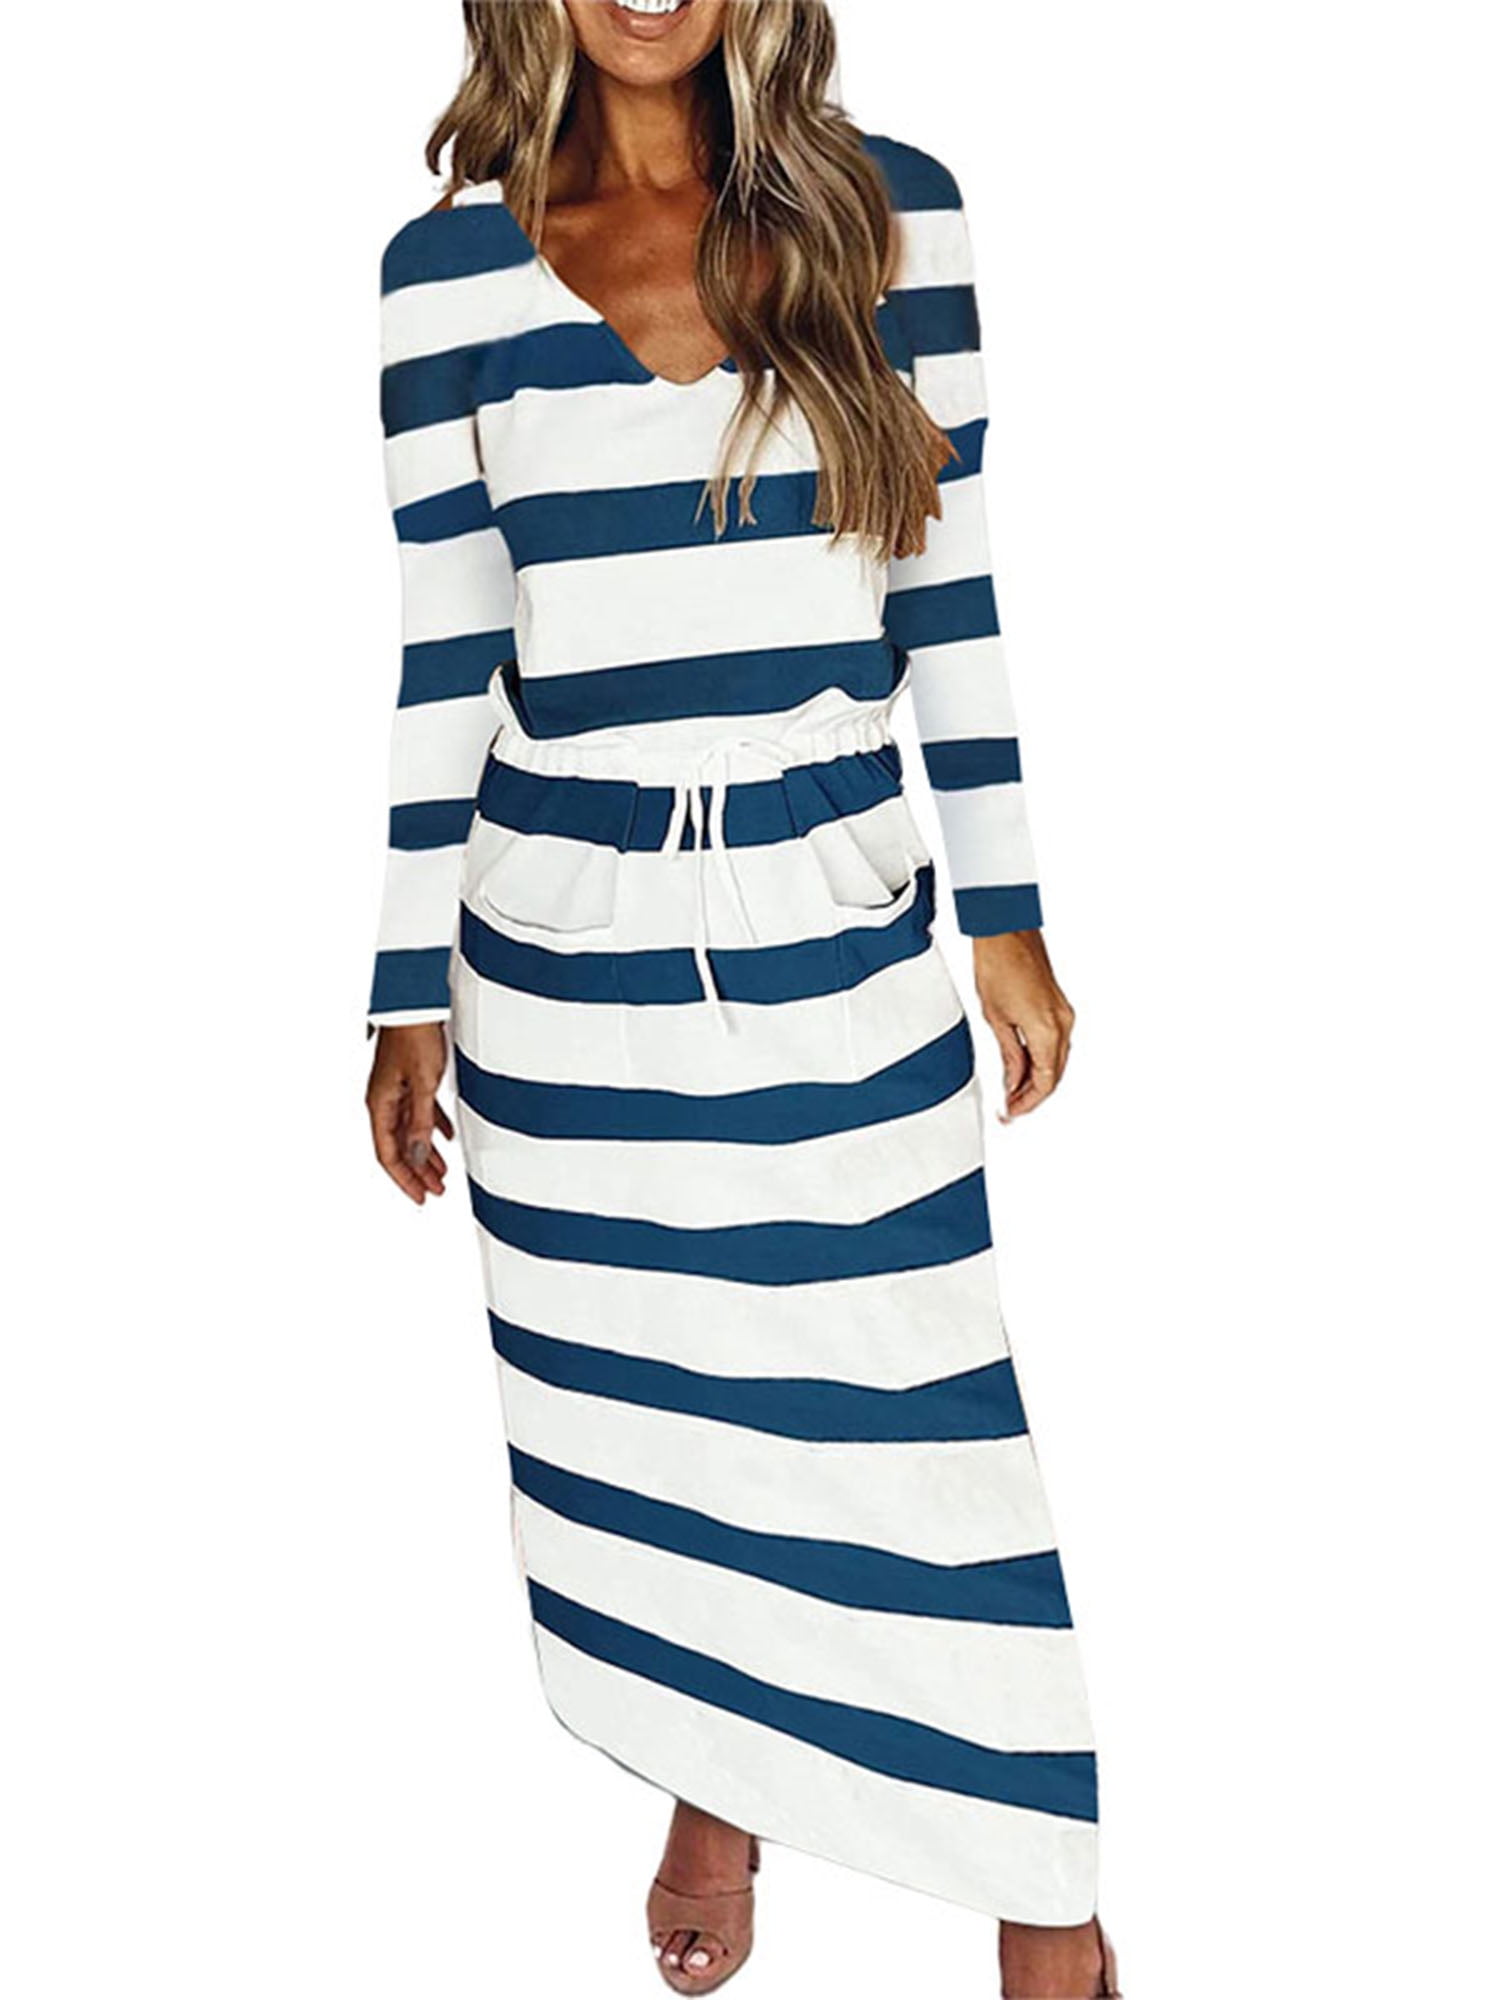 HODOD Women Half Sleeve Stripe Elastic Waist Pocket Ruffle Loose Mini Casual Dress 